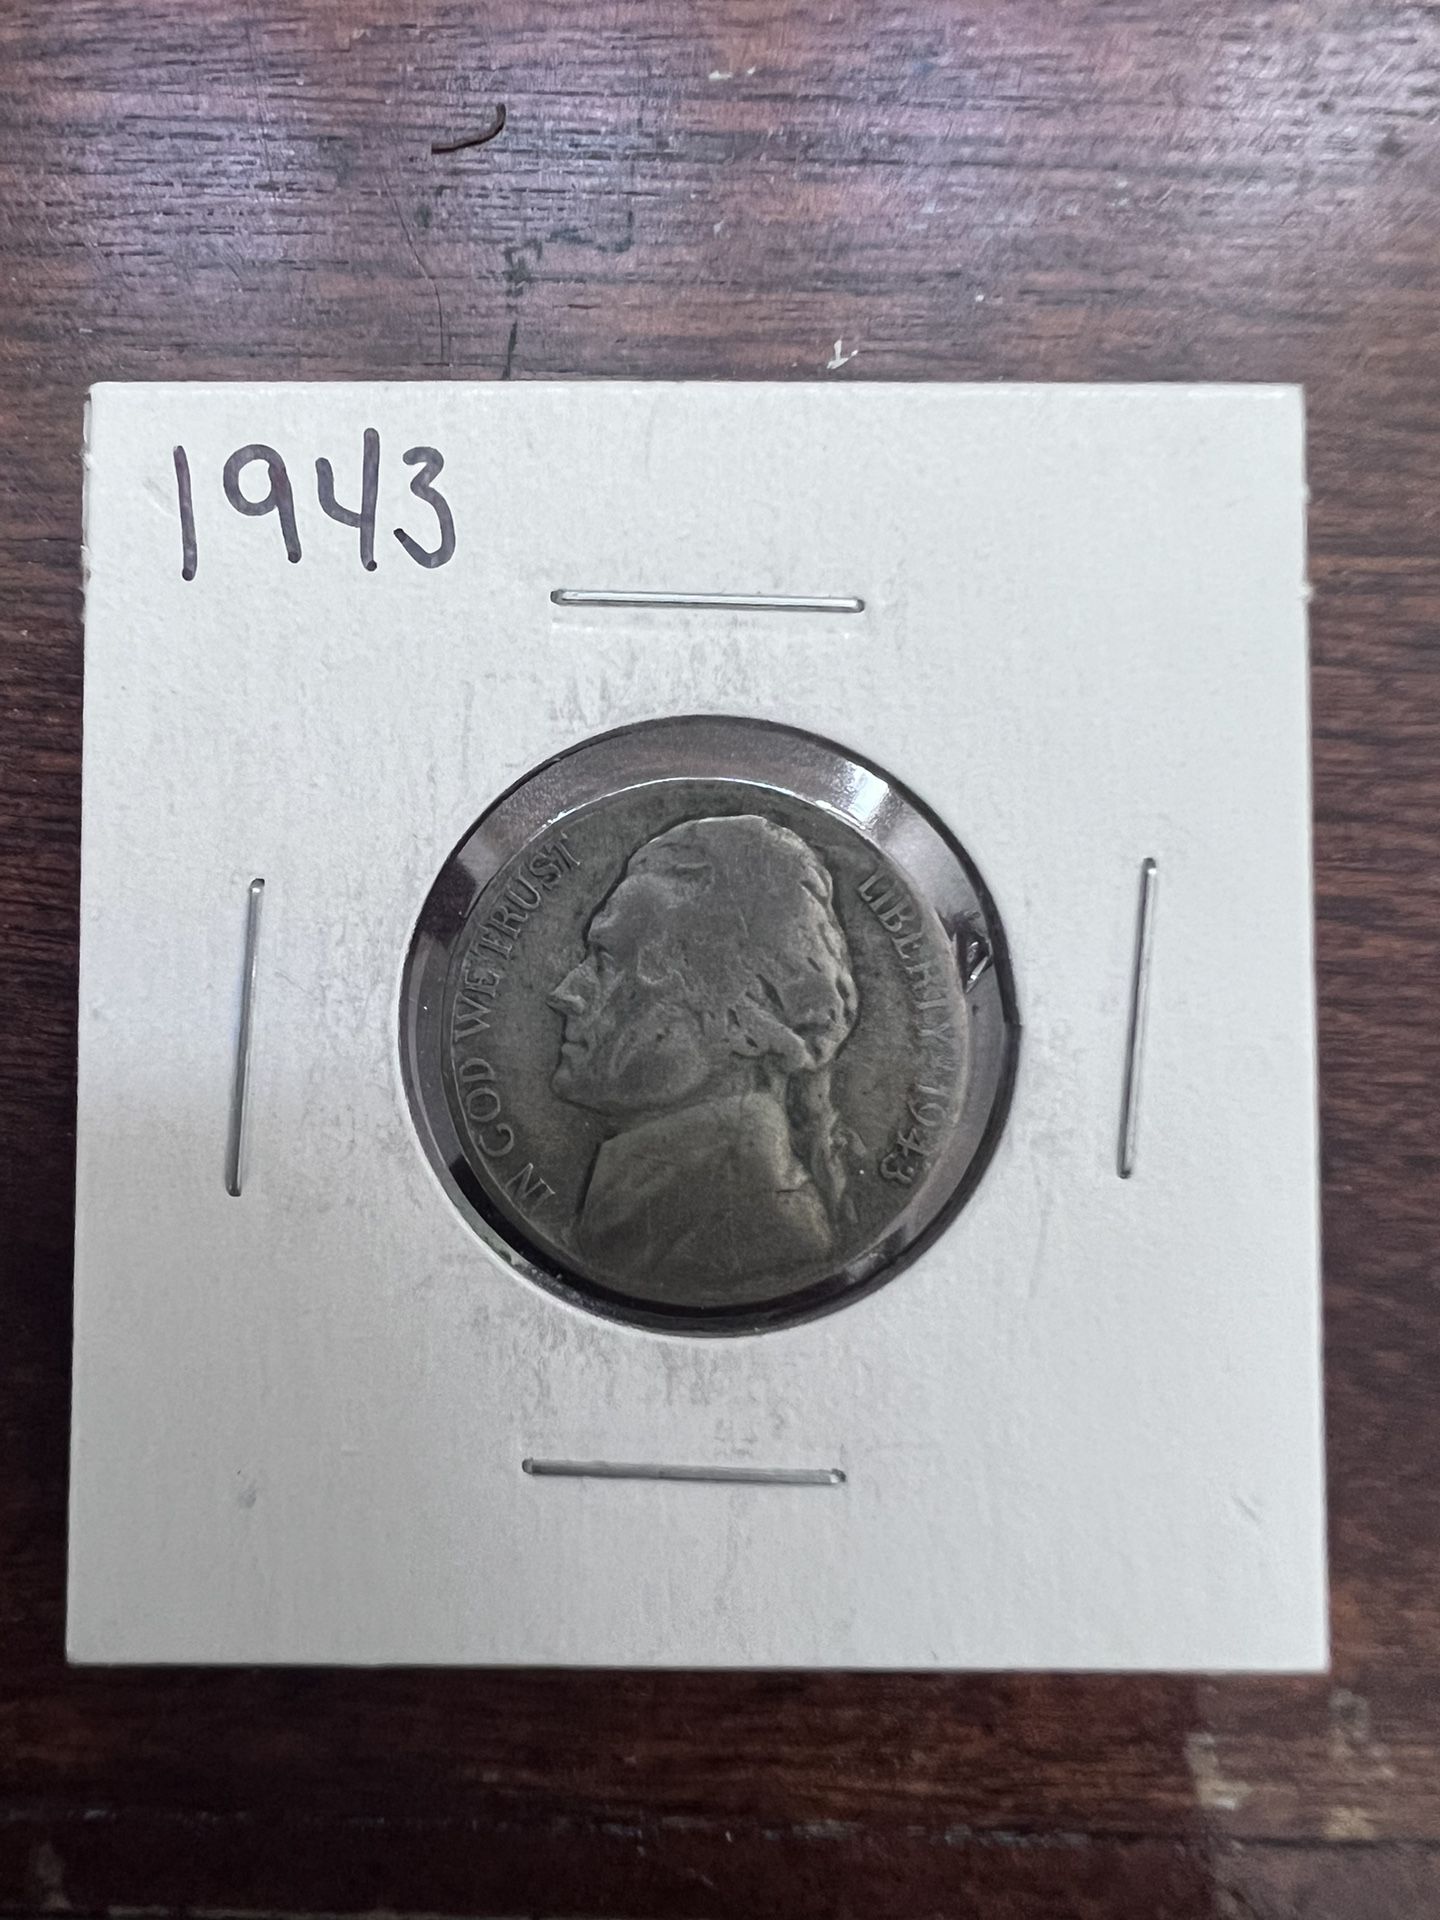 1943 War nickel (p)